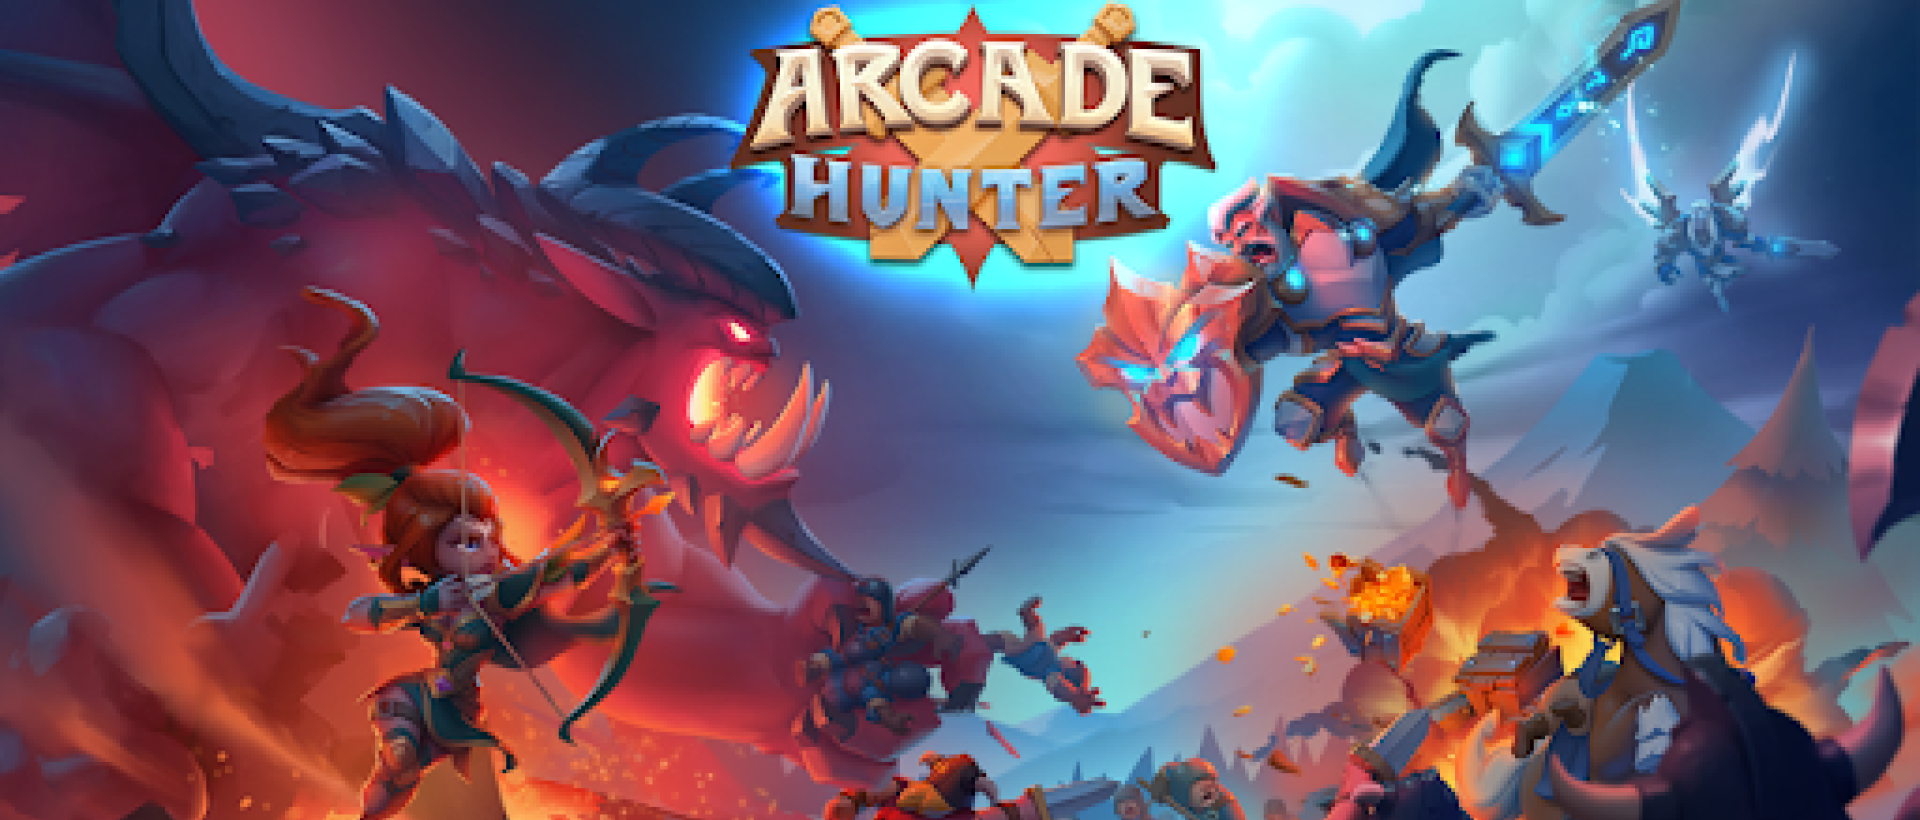 Download & Play Arcade Hunter: Sword, Gun, and Magic on PC & Mac with NoxPlayer (Emulator)